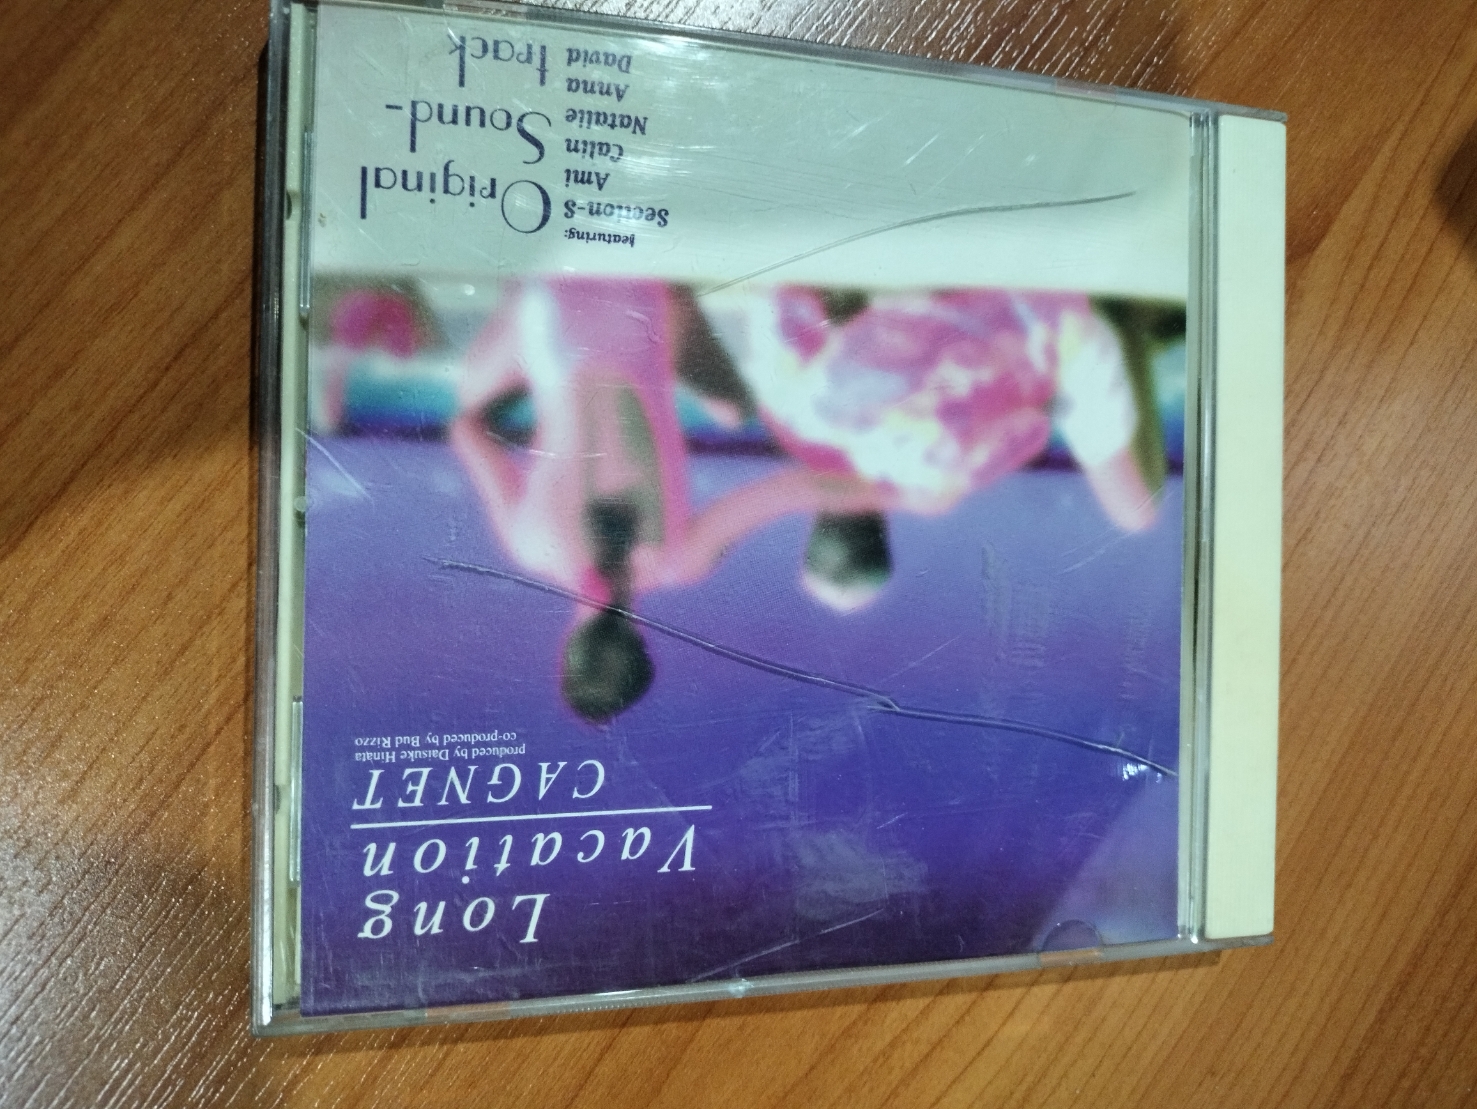 CD ซีดีเพลงสากล LONG VACATION CAGNET